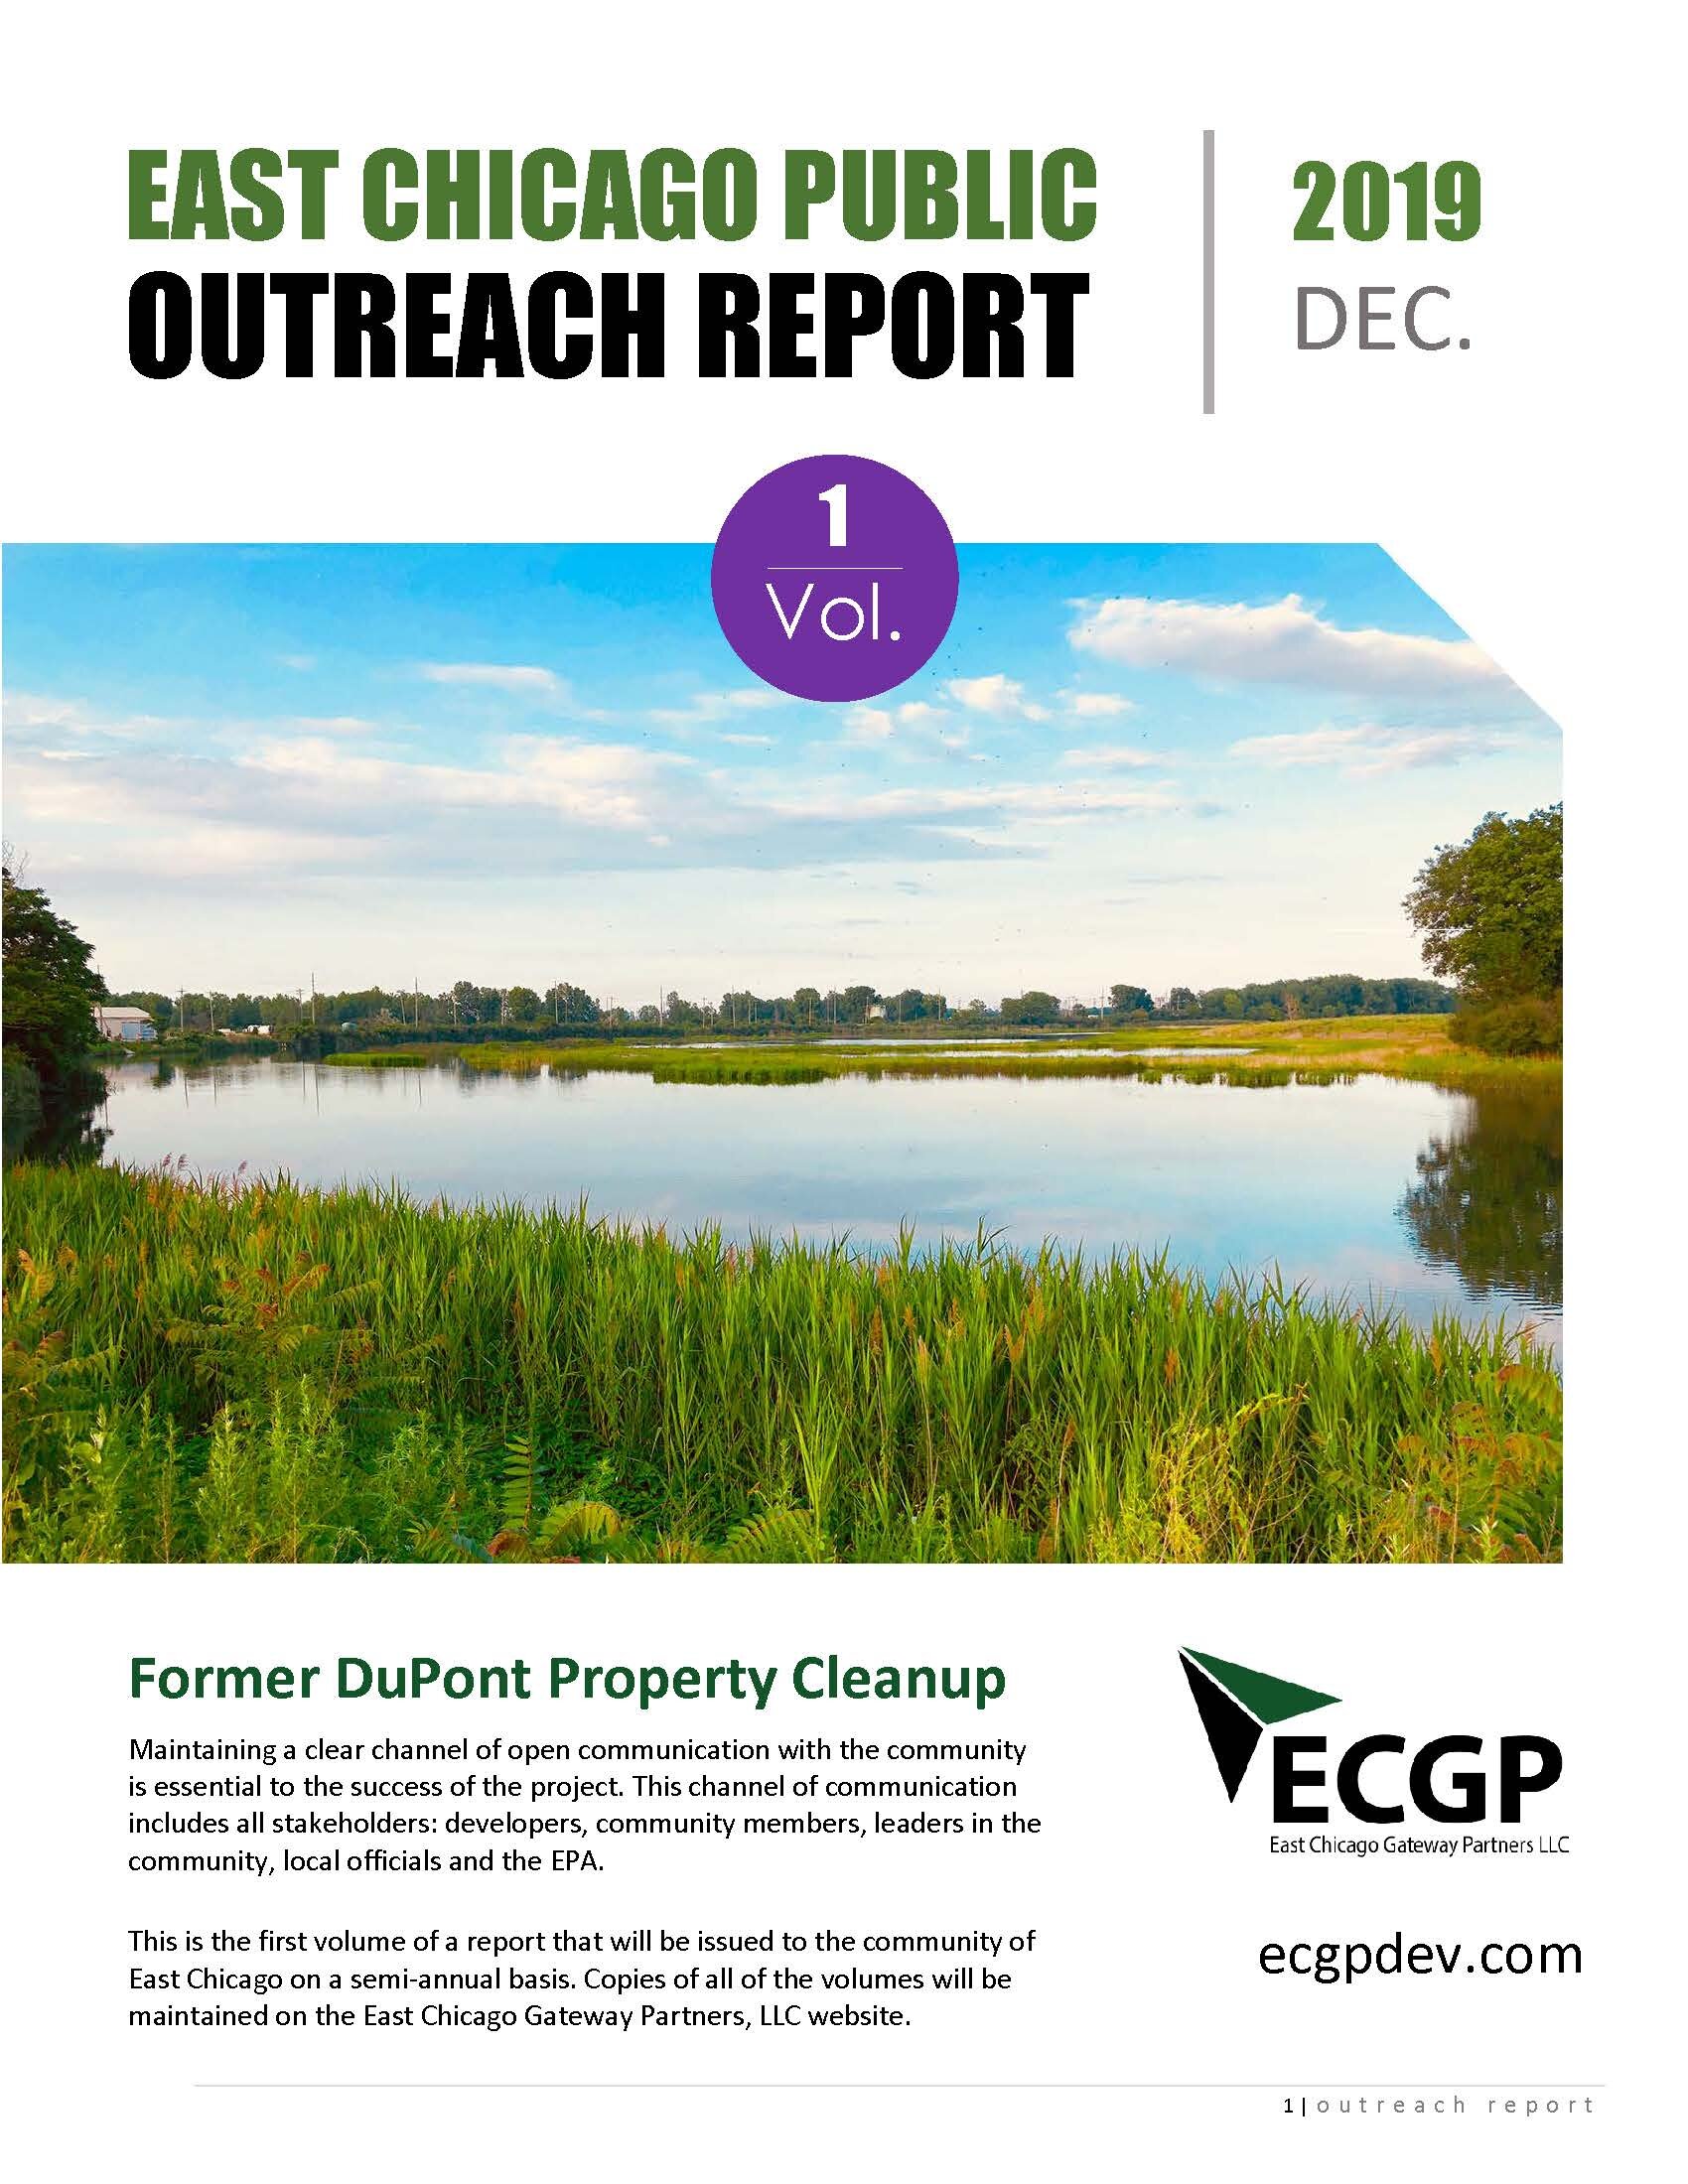 Public Outreach Report - December 2019